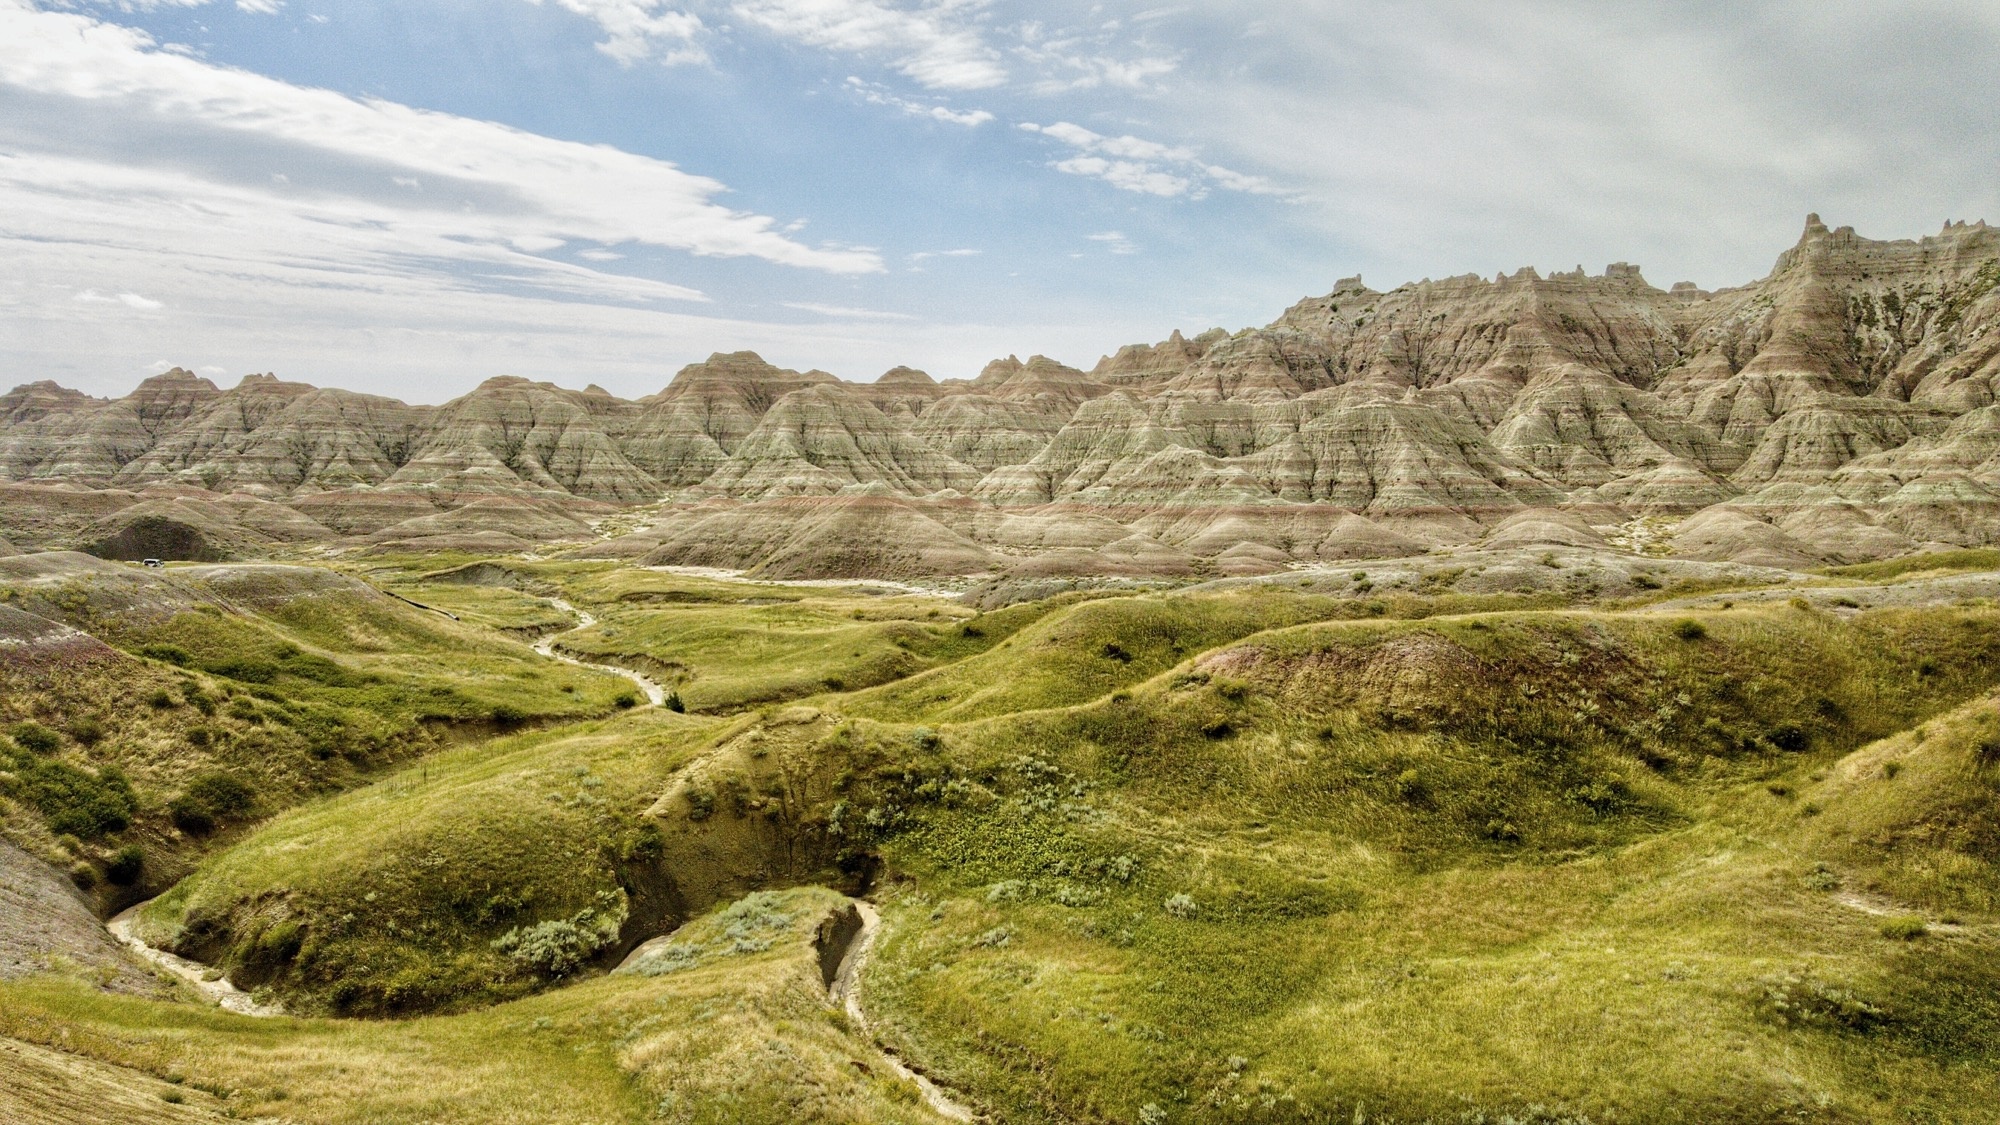 Badlands of South Dakota, Inspiring wallpaper, HD background, Western beauty, 2000x1130 HD Desktop